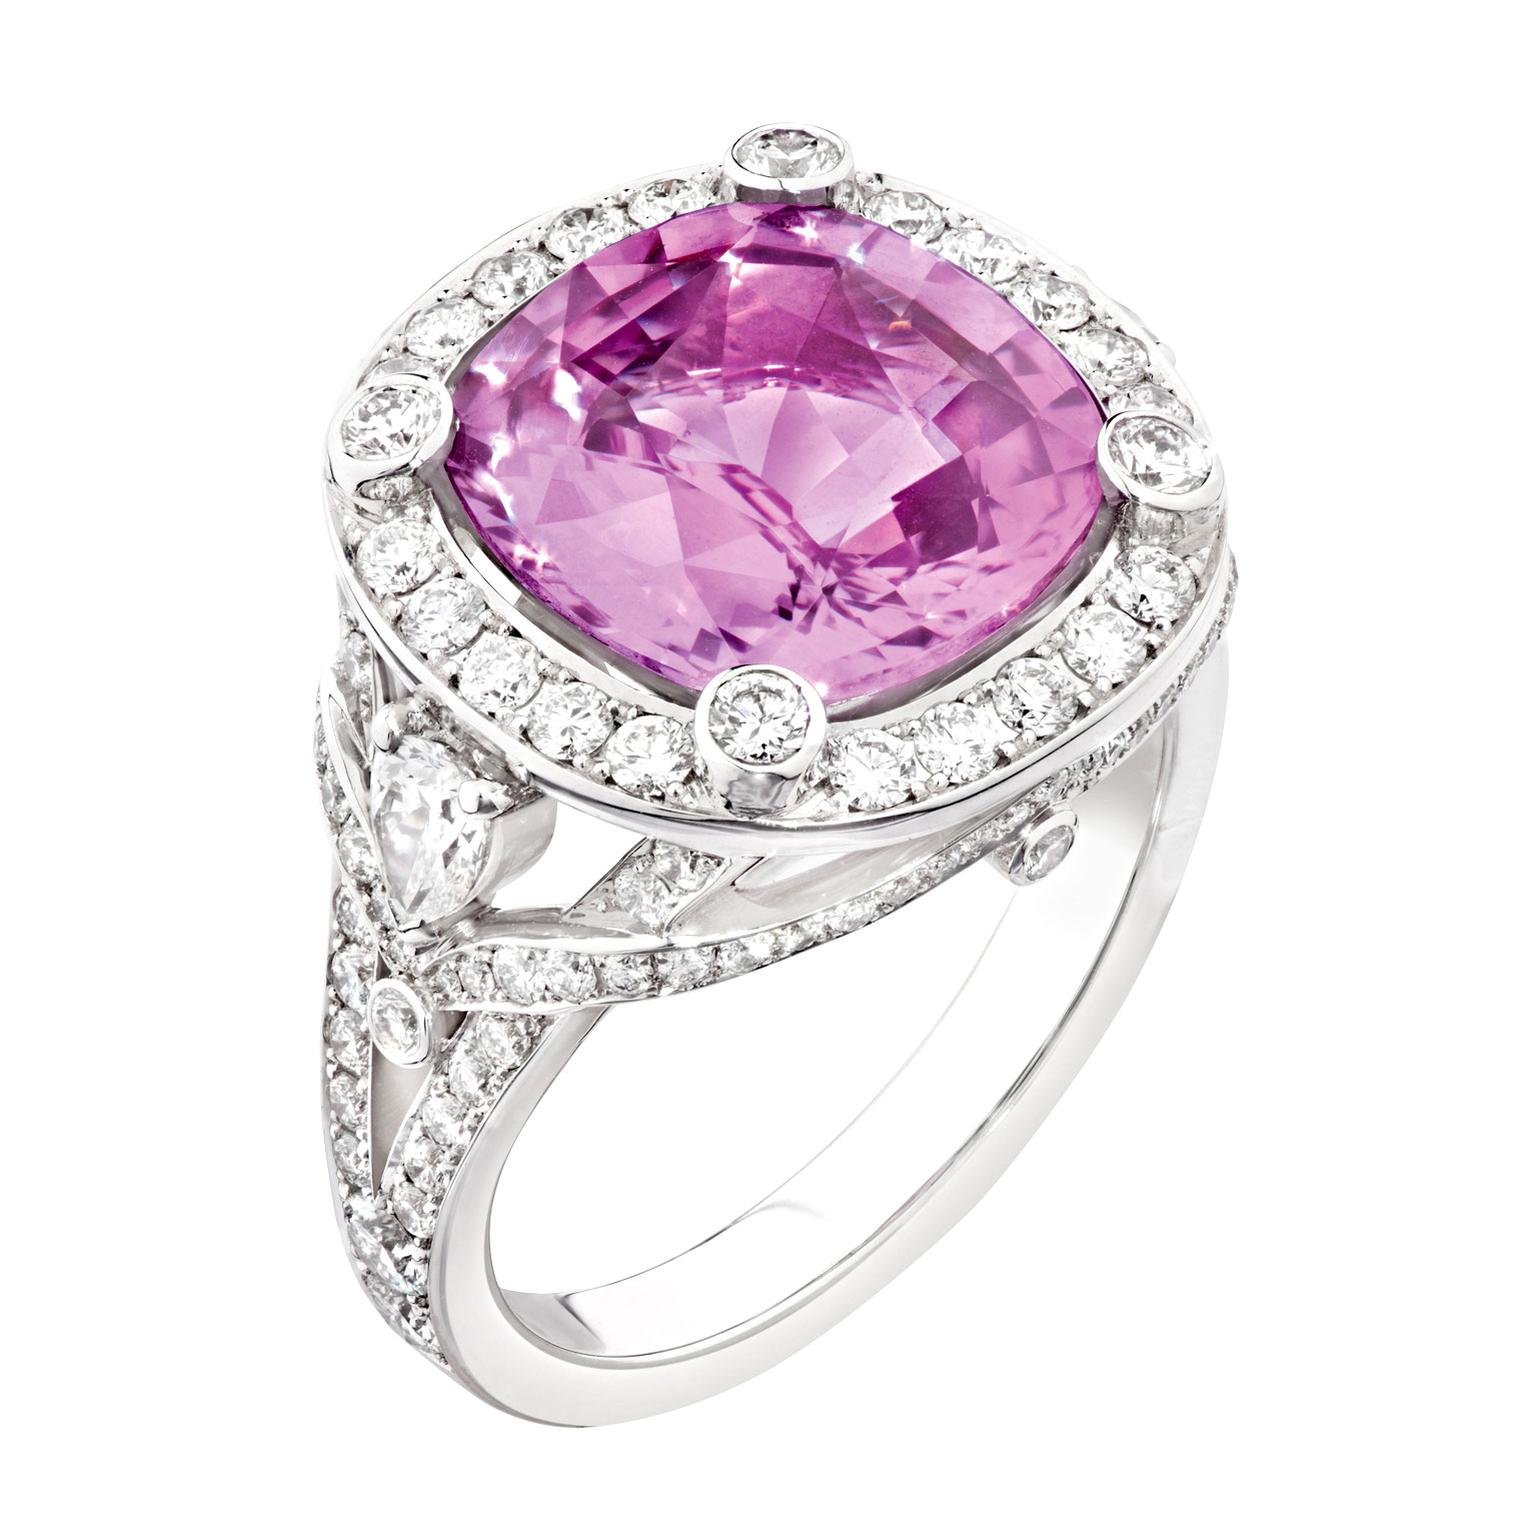 Fabergé pink sapphire cushion-cut engagement ring